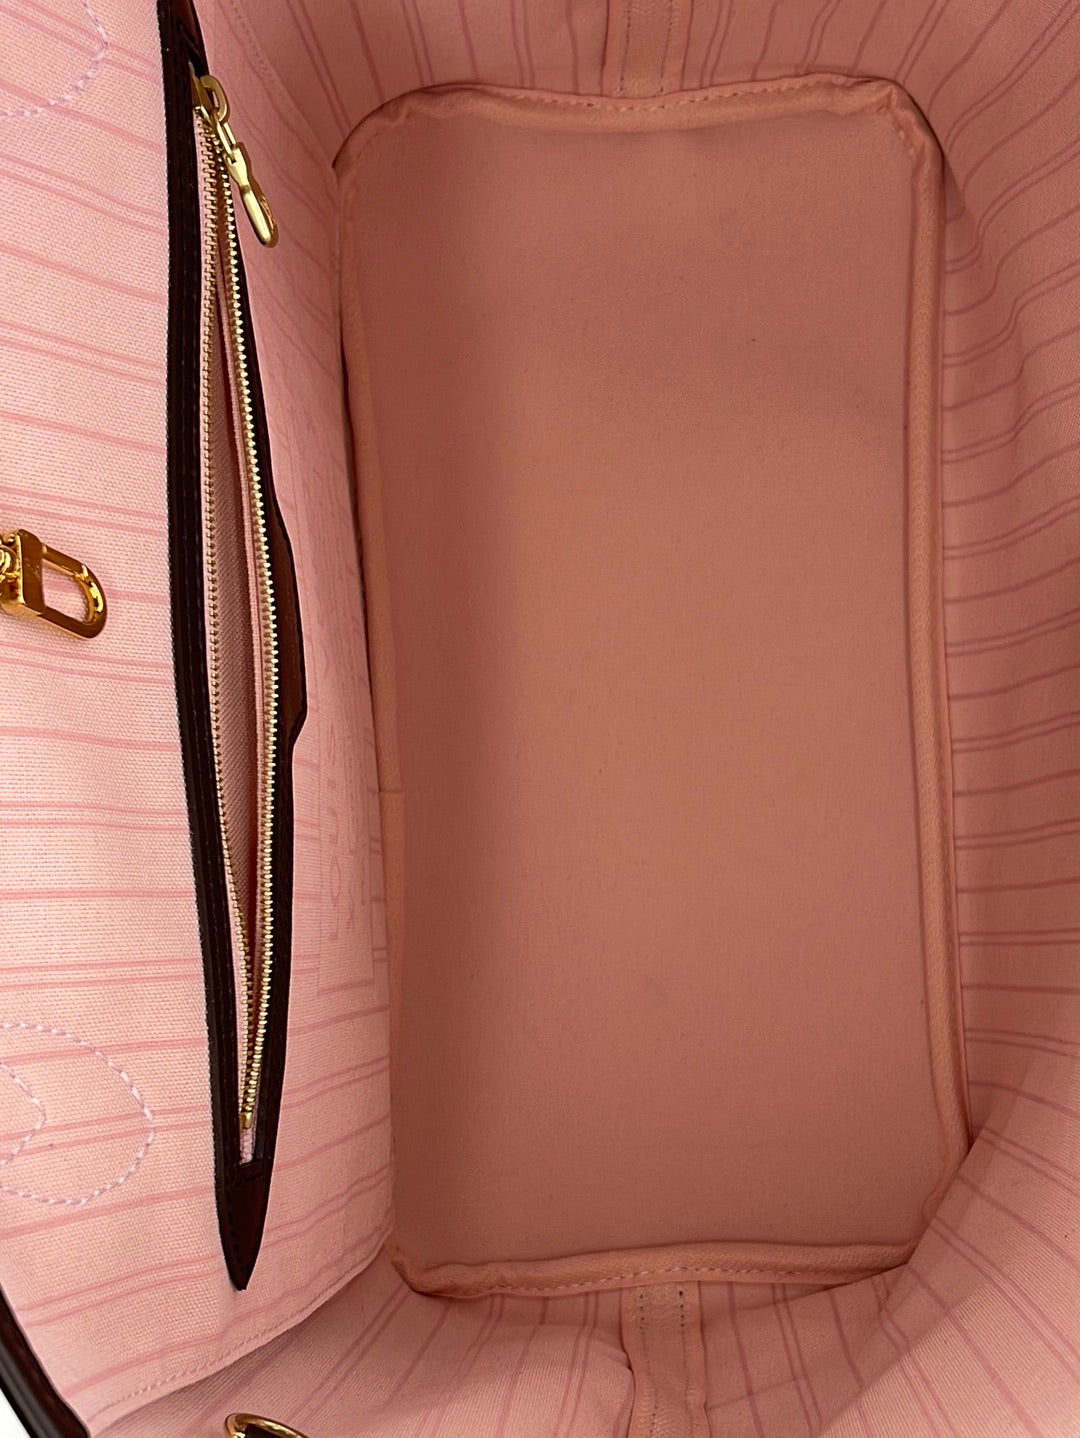 Preloved Louis Vuitton Monogram Neverfull MM Tote Bag (beige pink